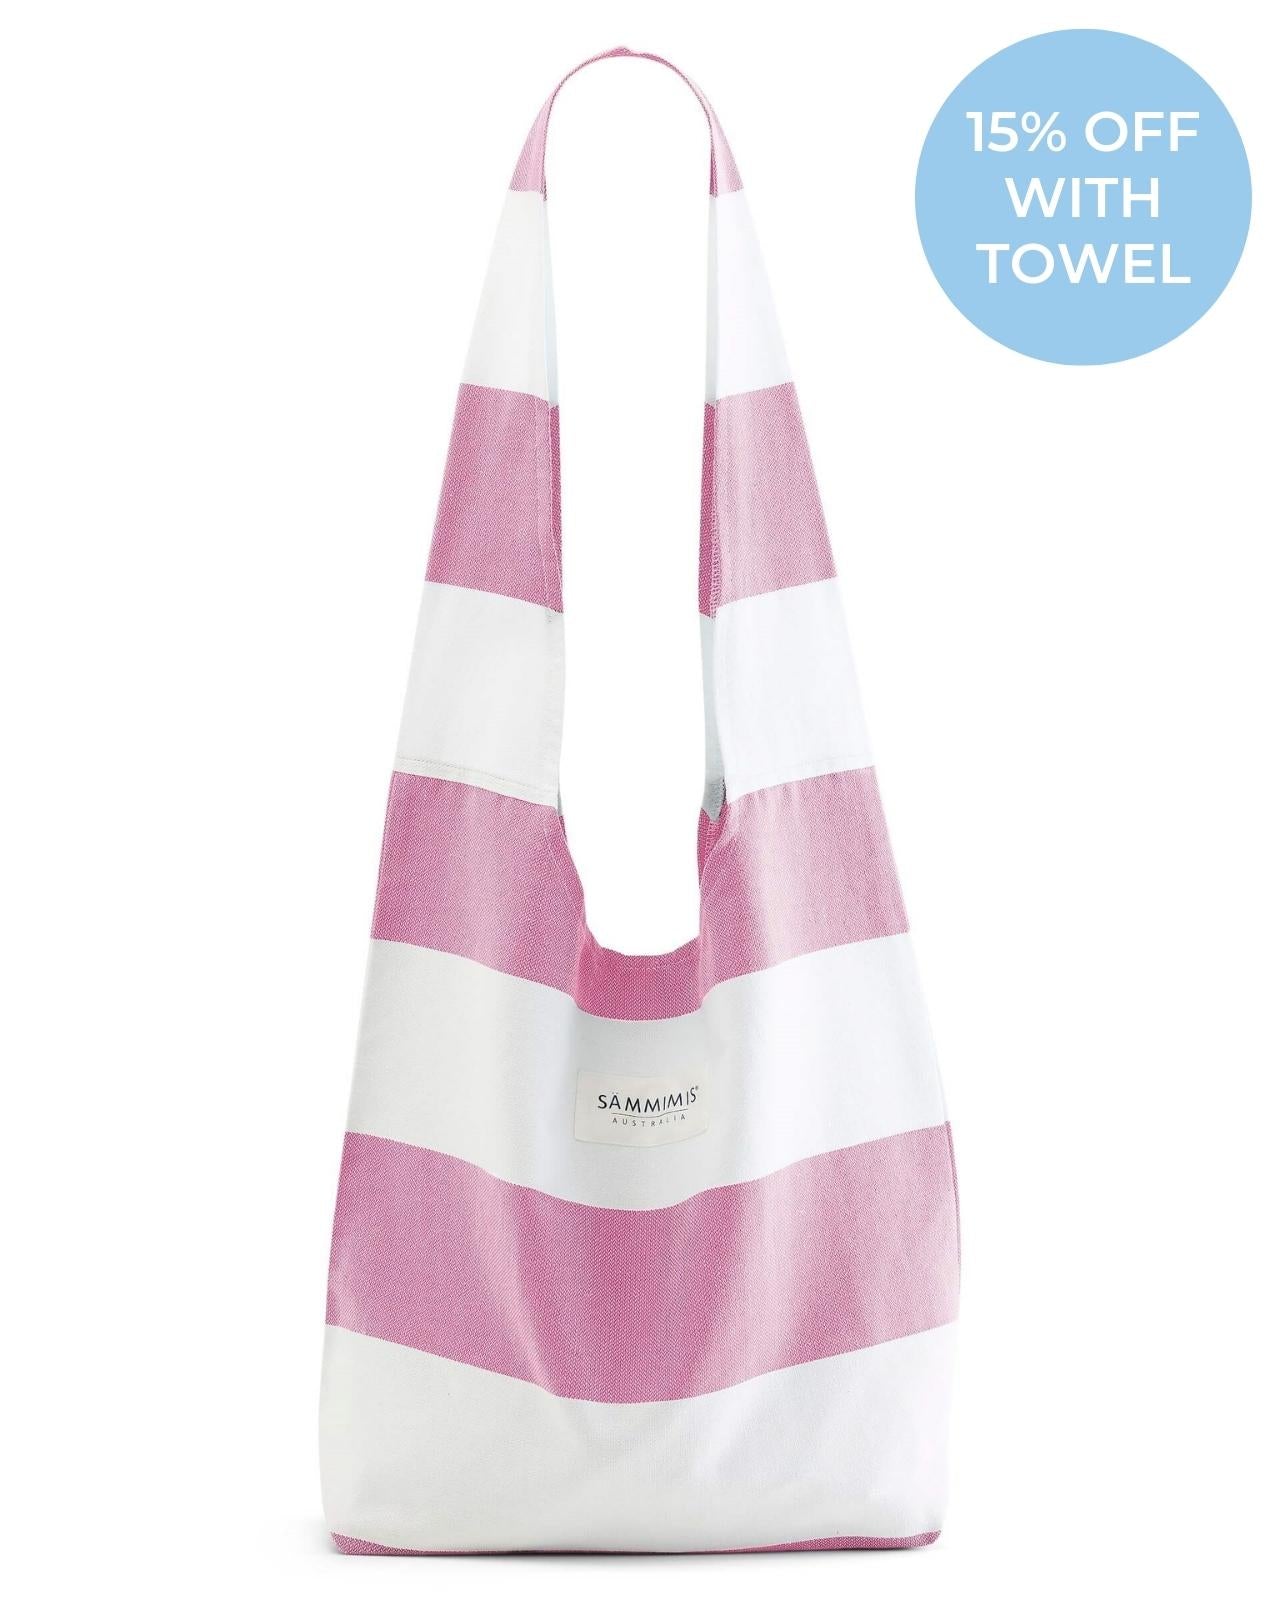 SANTORINI Bag: Pink/White